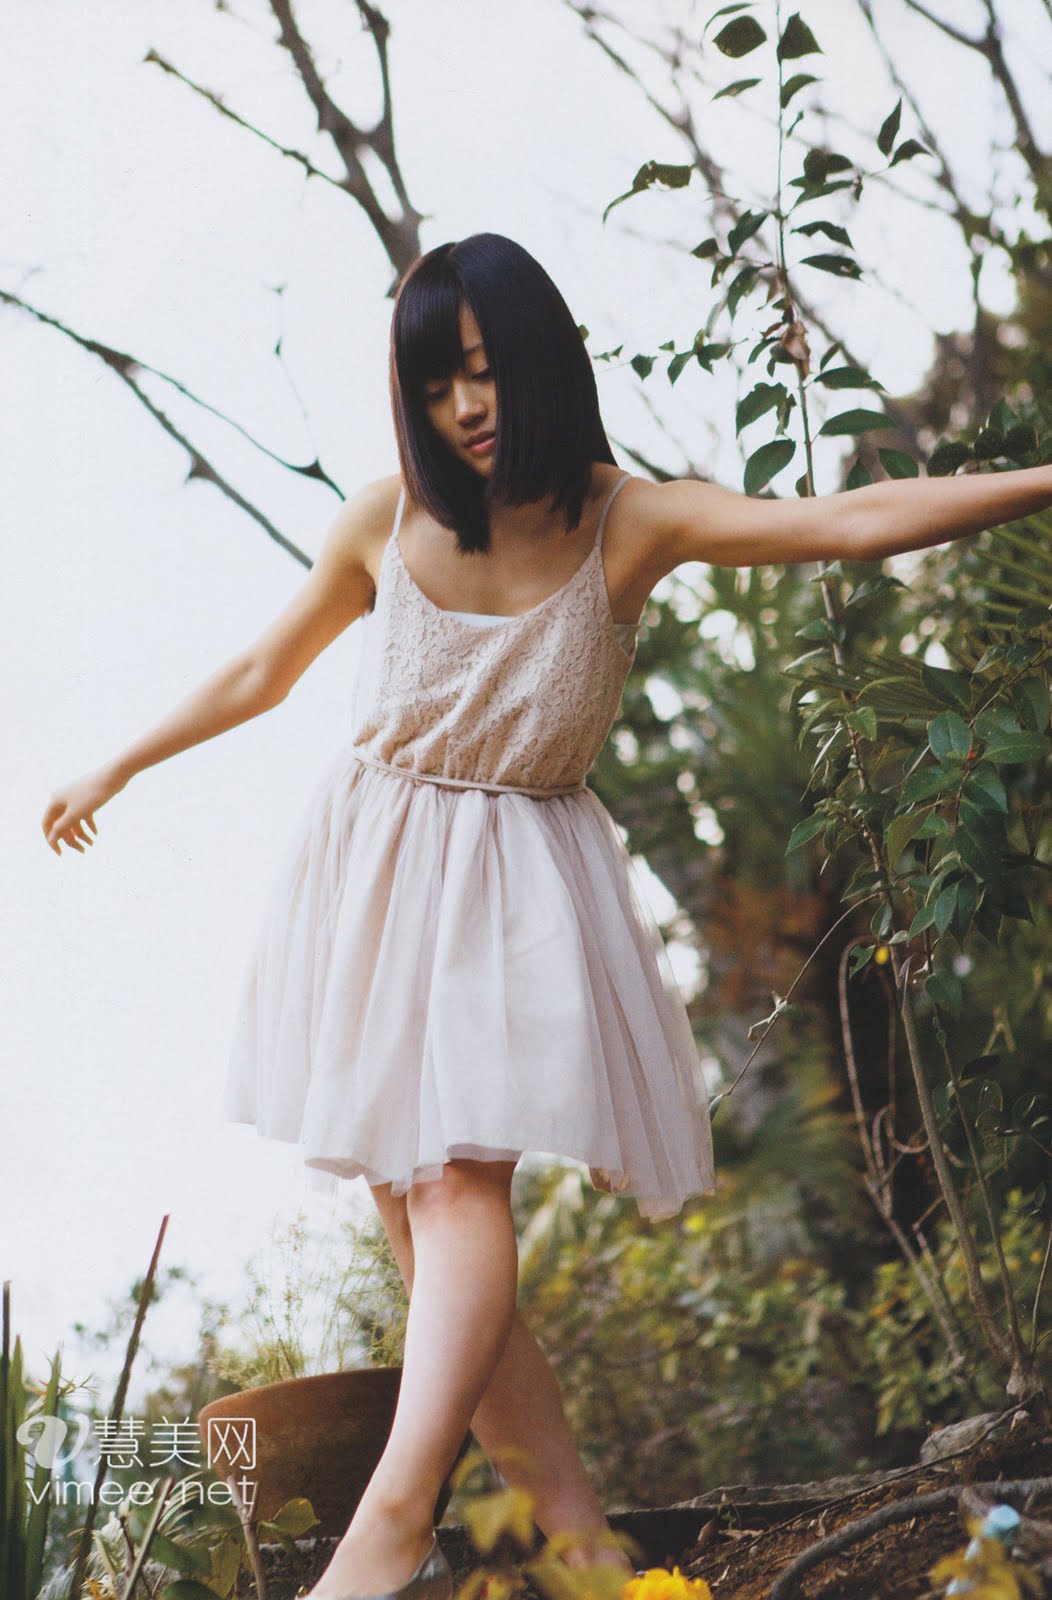 Kira Kira Anni: Maeda Atsuko In Tokyo Photobook Download!